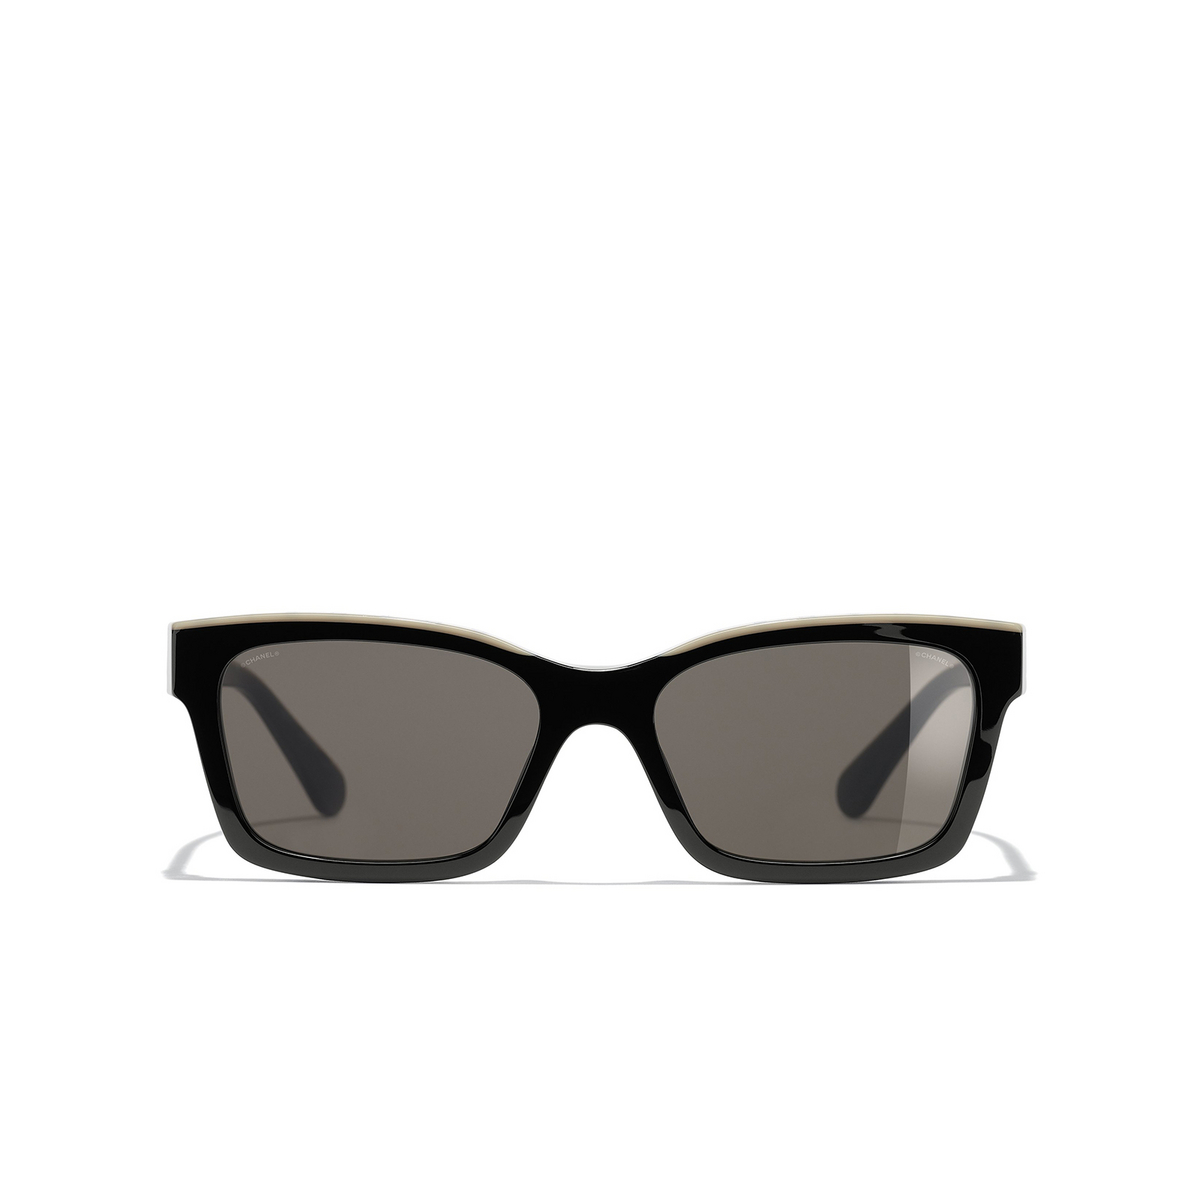 CHANEL square Sunglasses C534/3 Black & Beige - front view